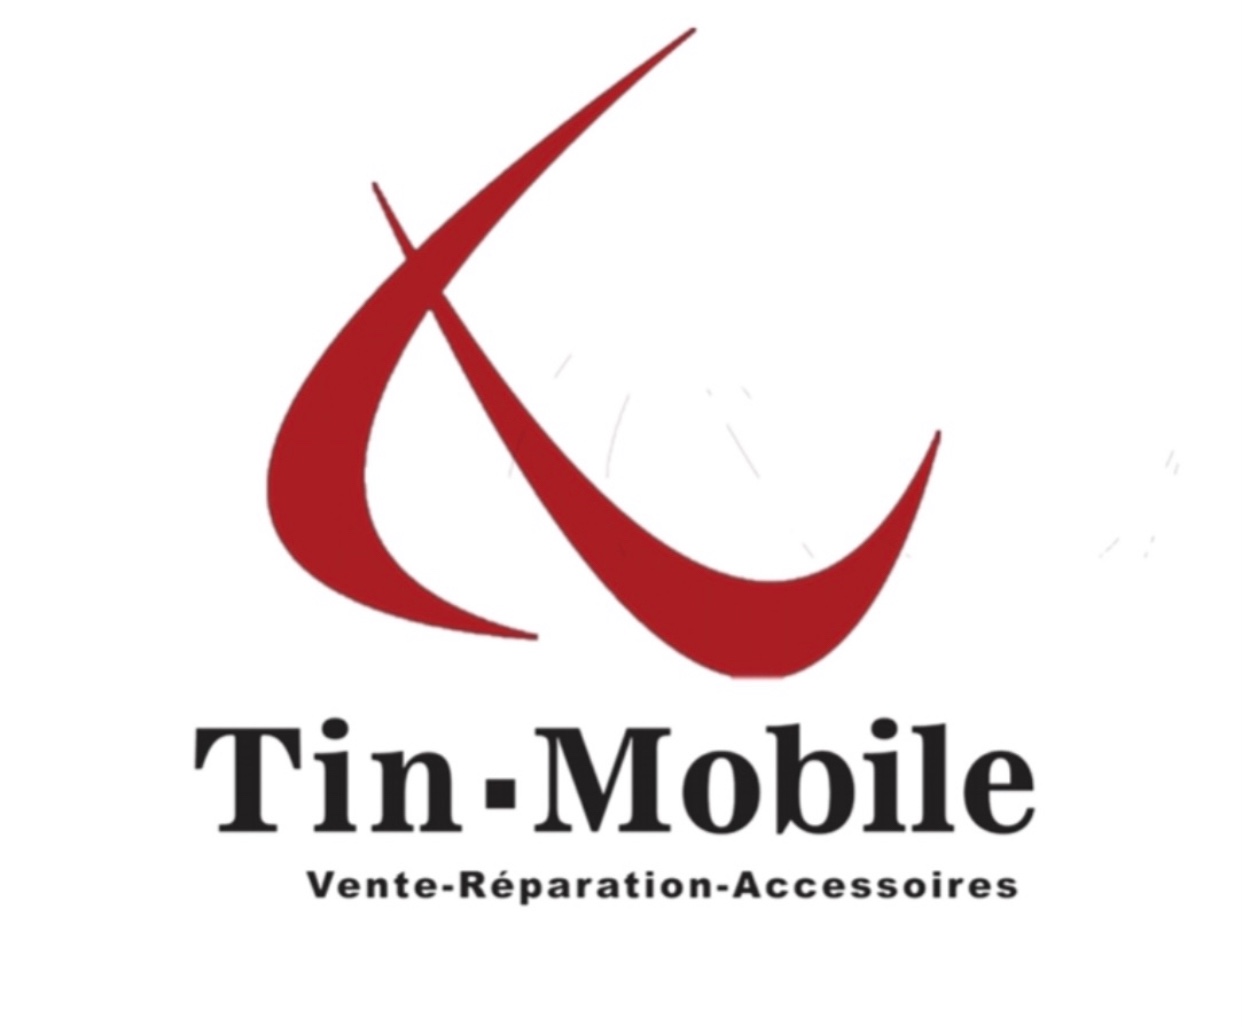 Tin Mobile 